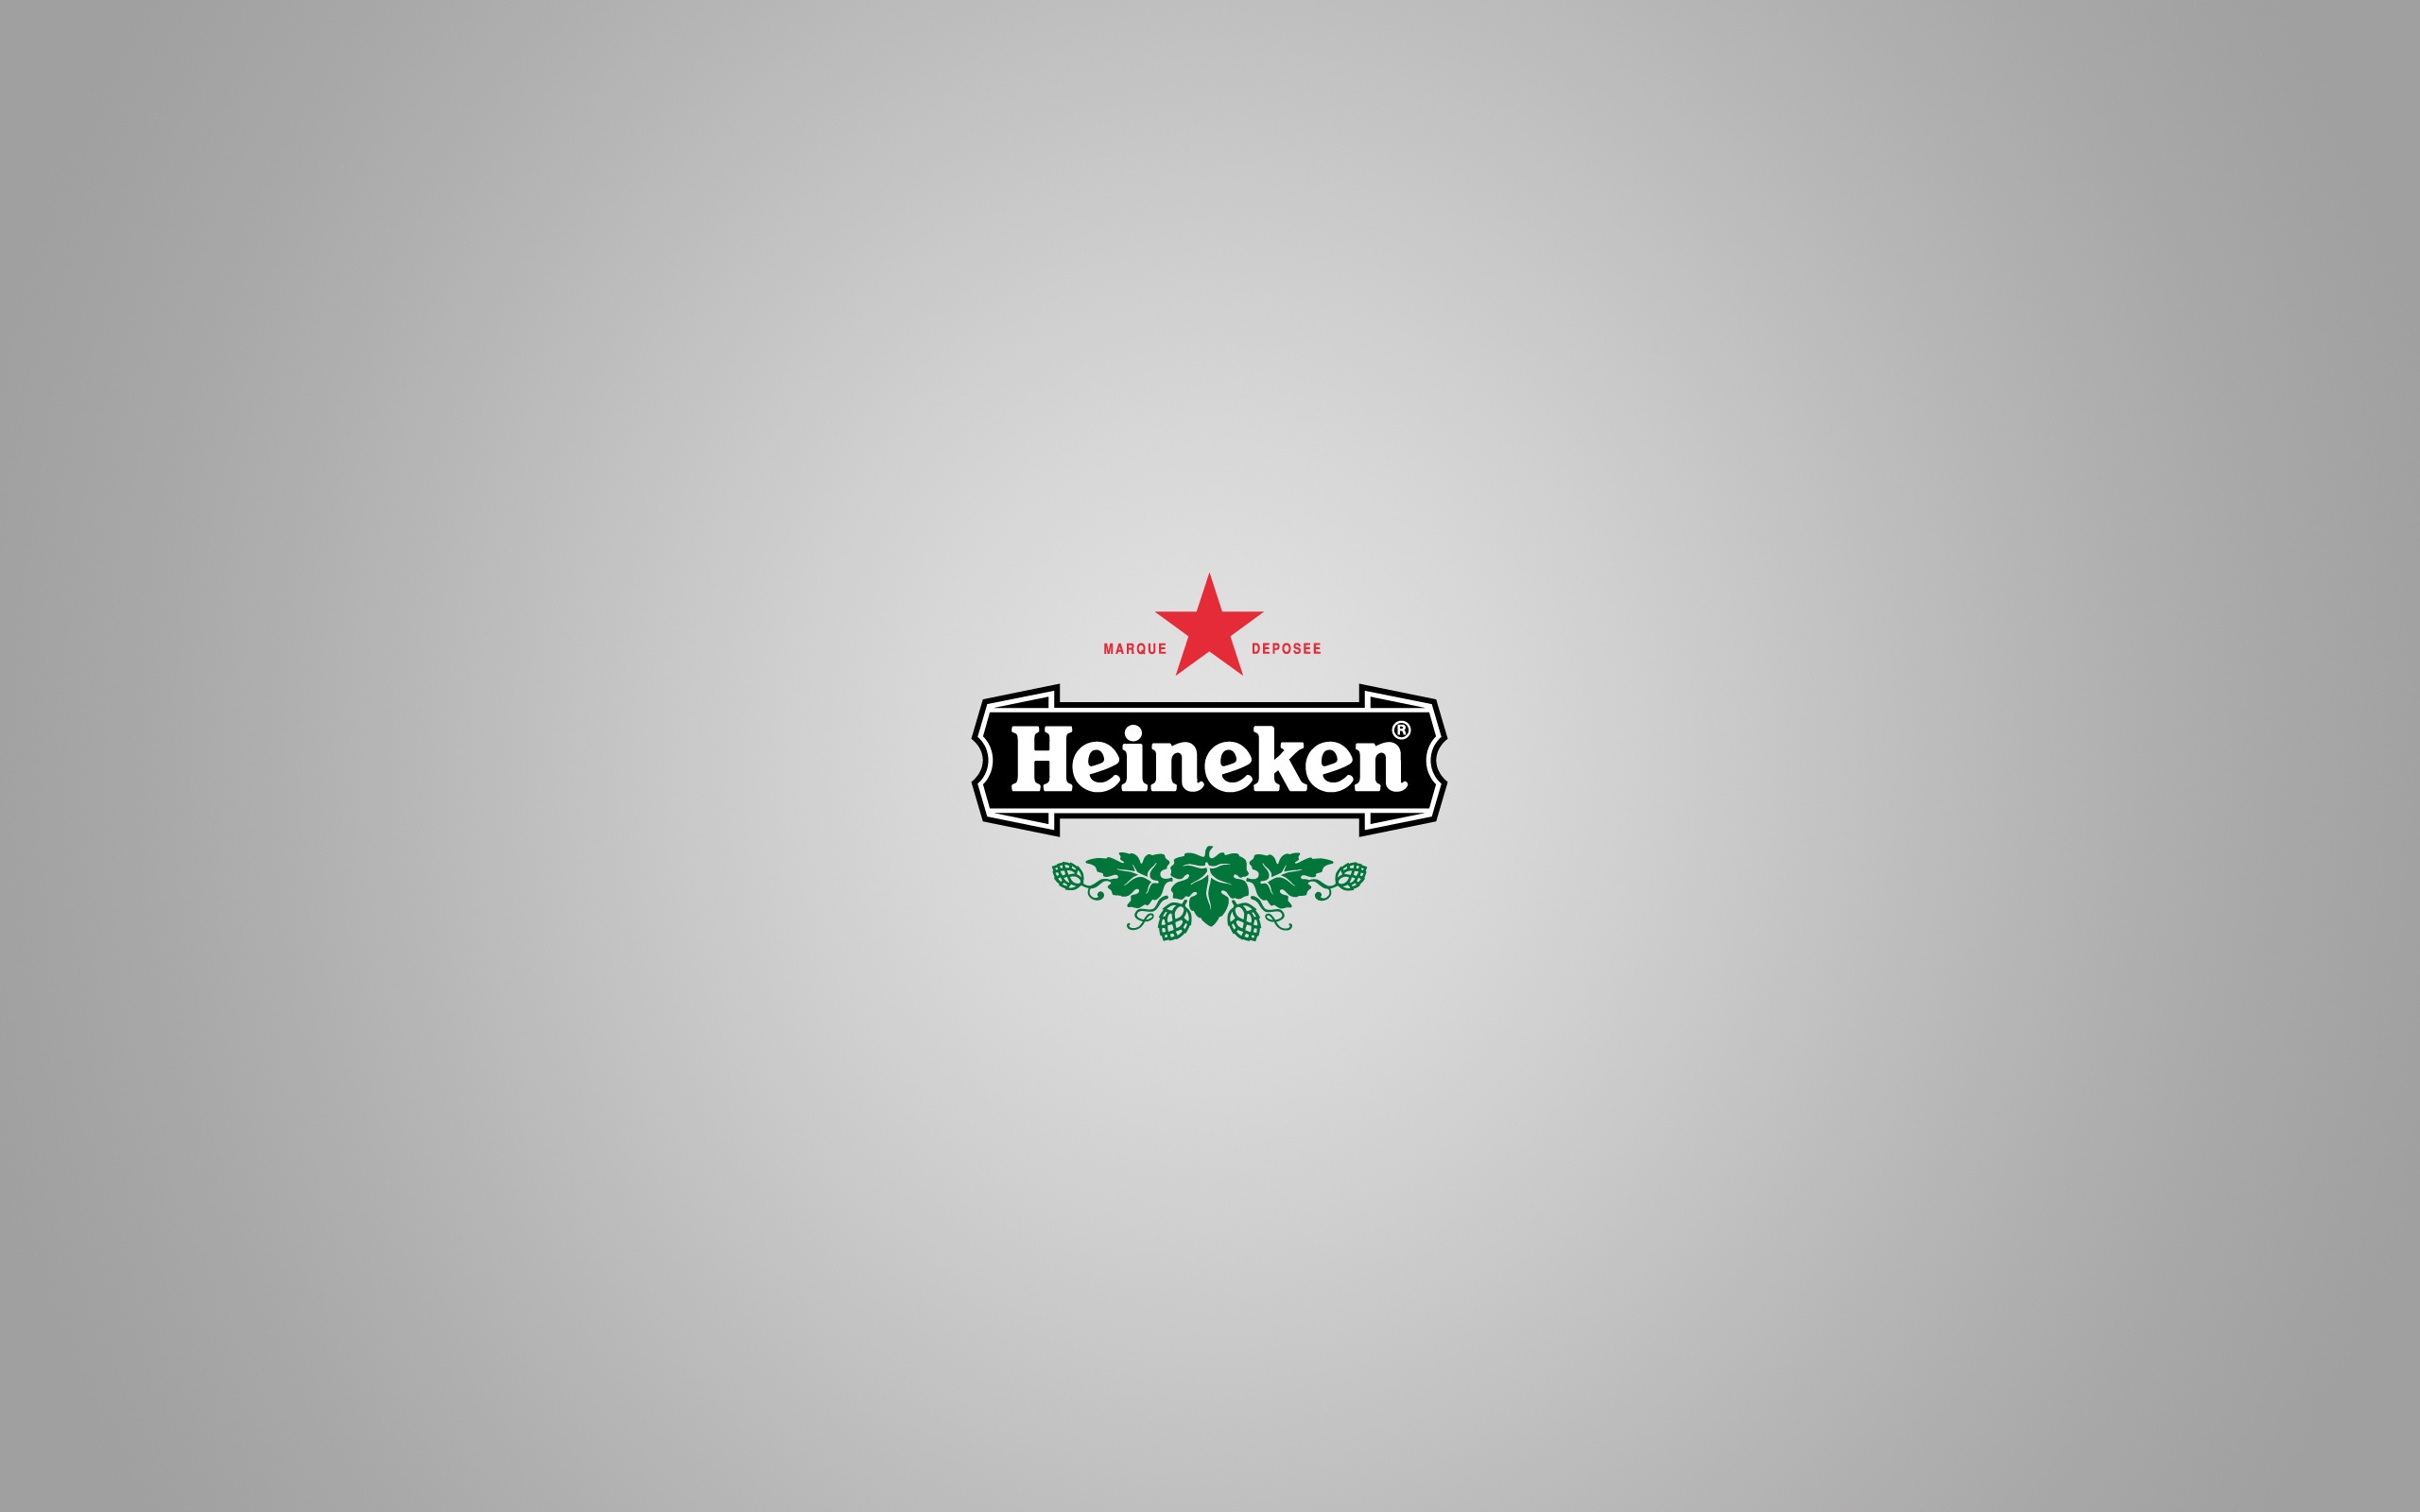 Free photo Heineken logo